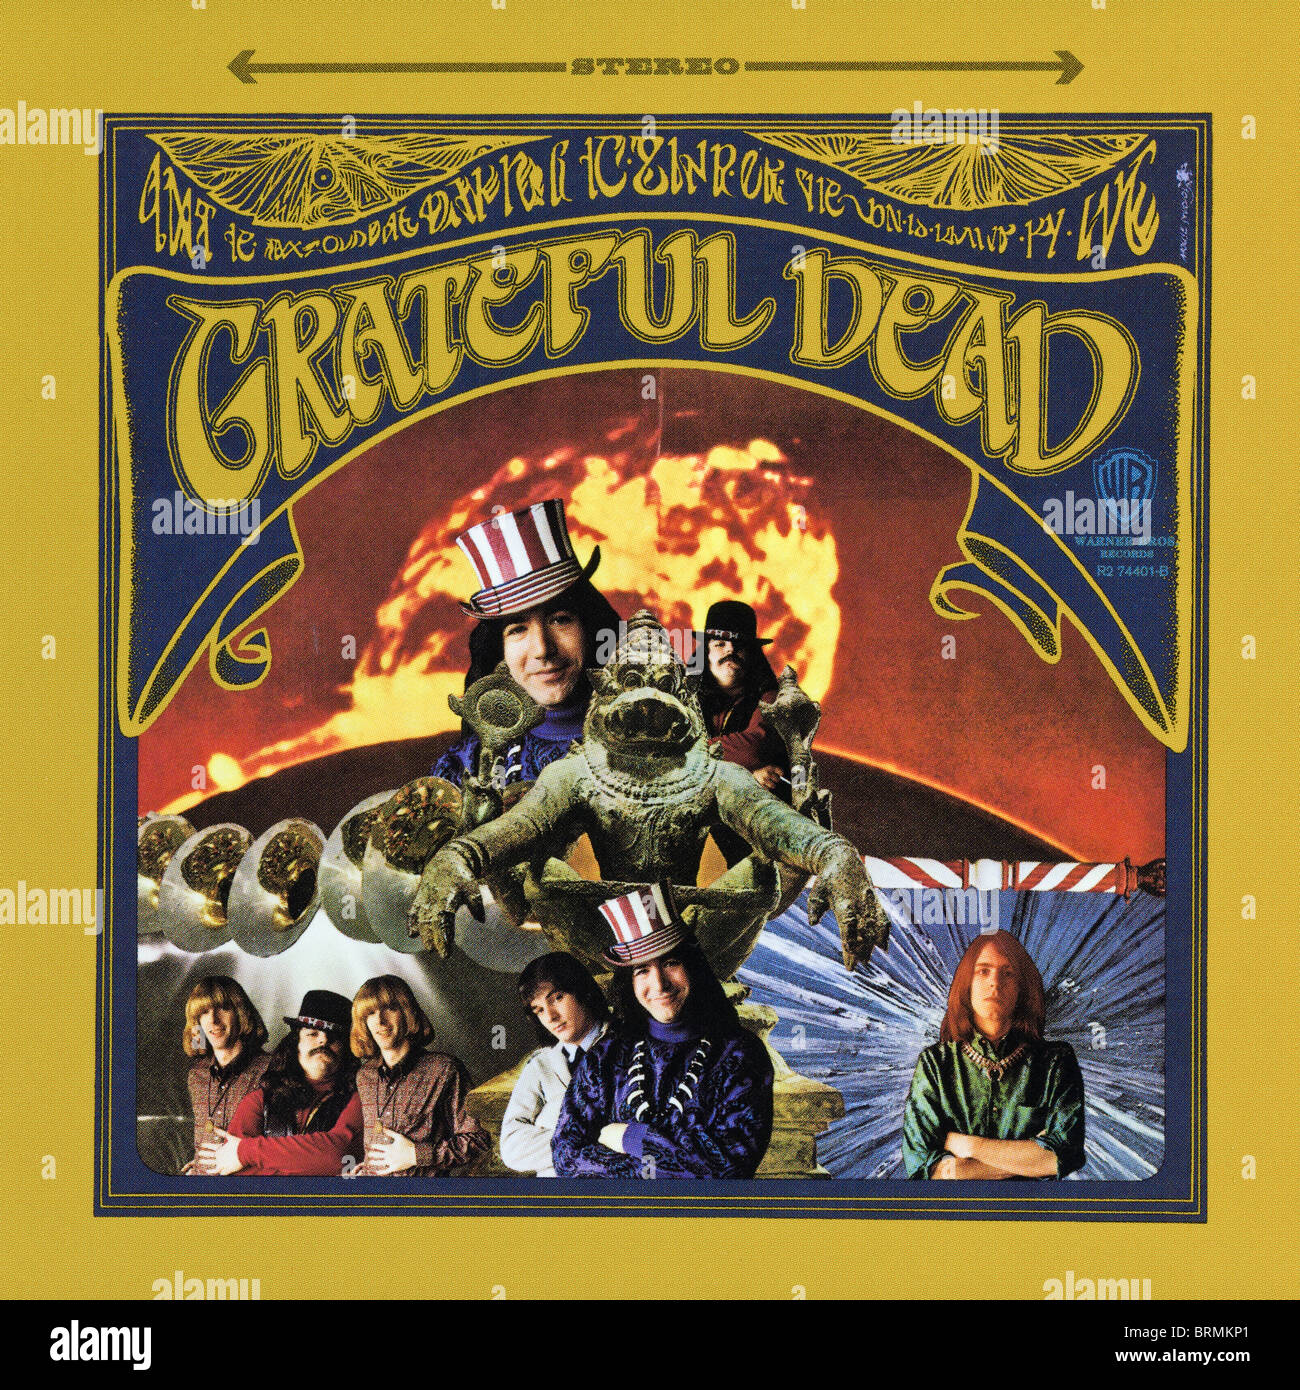 album-cover-the-grateful-dead-debut-album-by-the-grateful-dead-released-BRMKP1.jpg